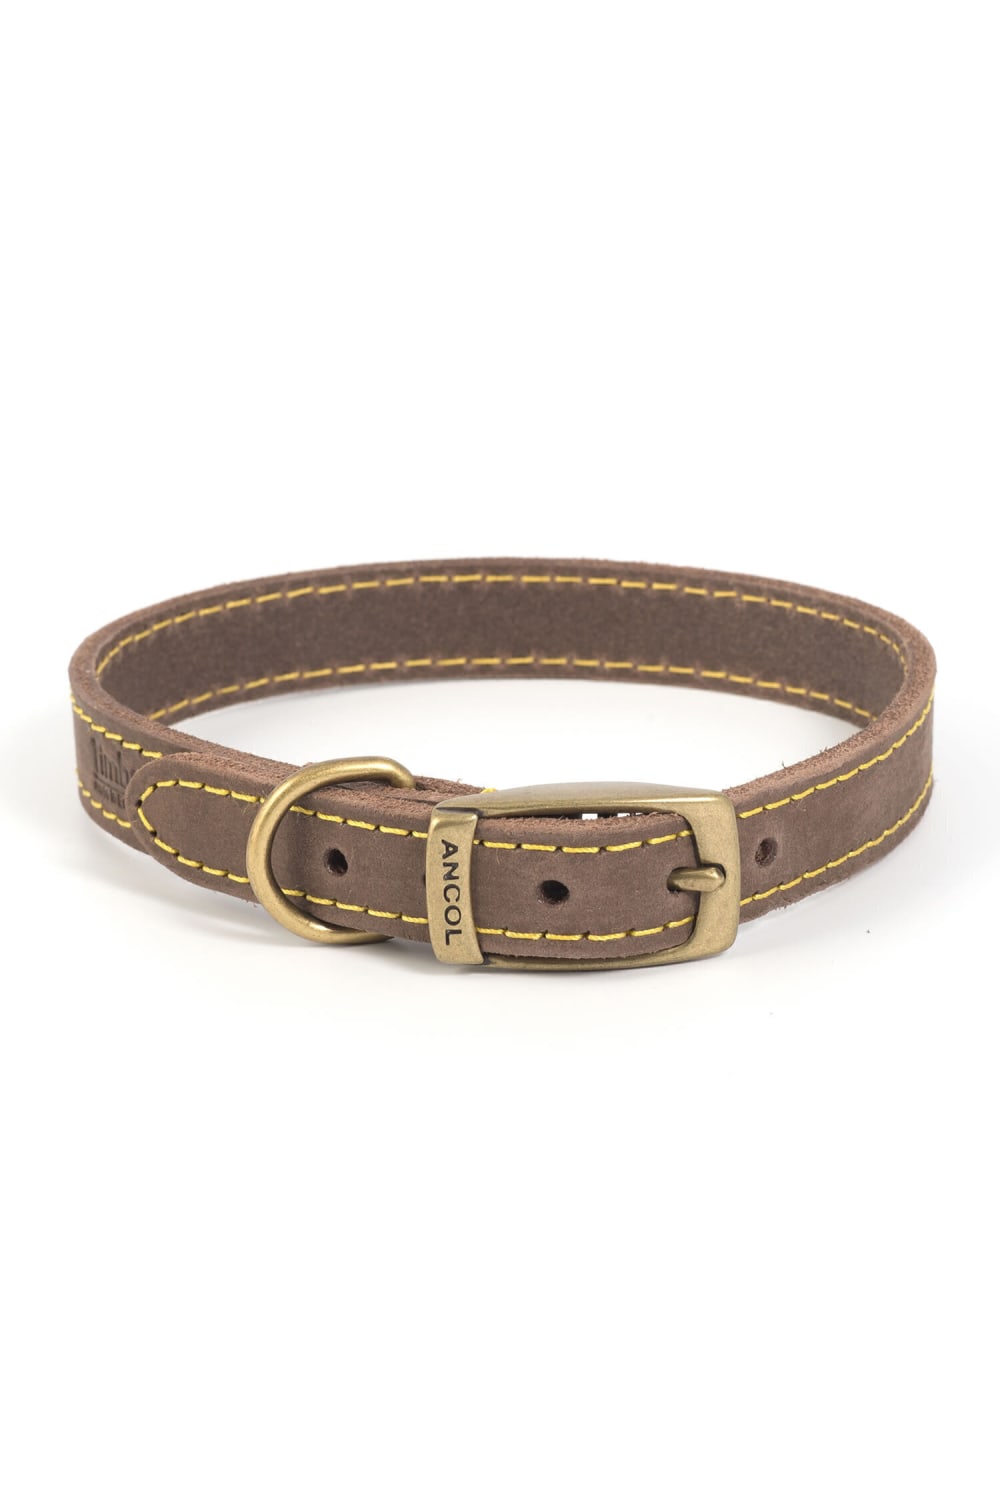 Ancol Timberwolf Leather Dog Collar (Sable) (5)